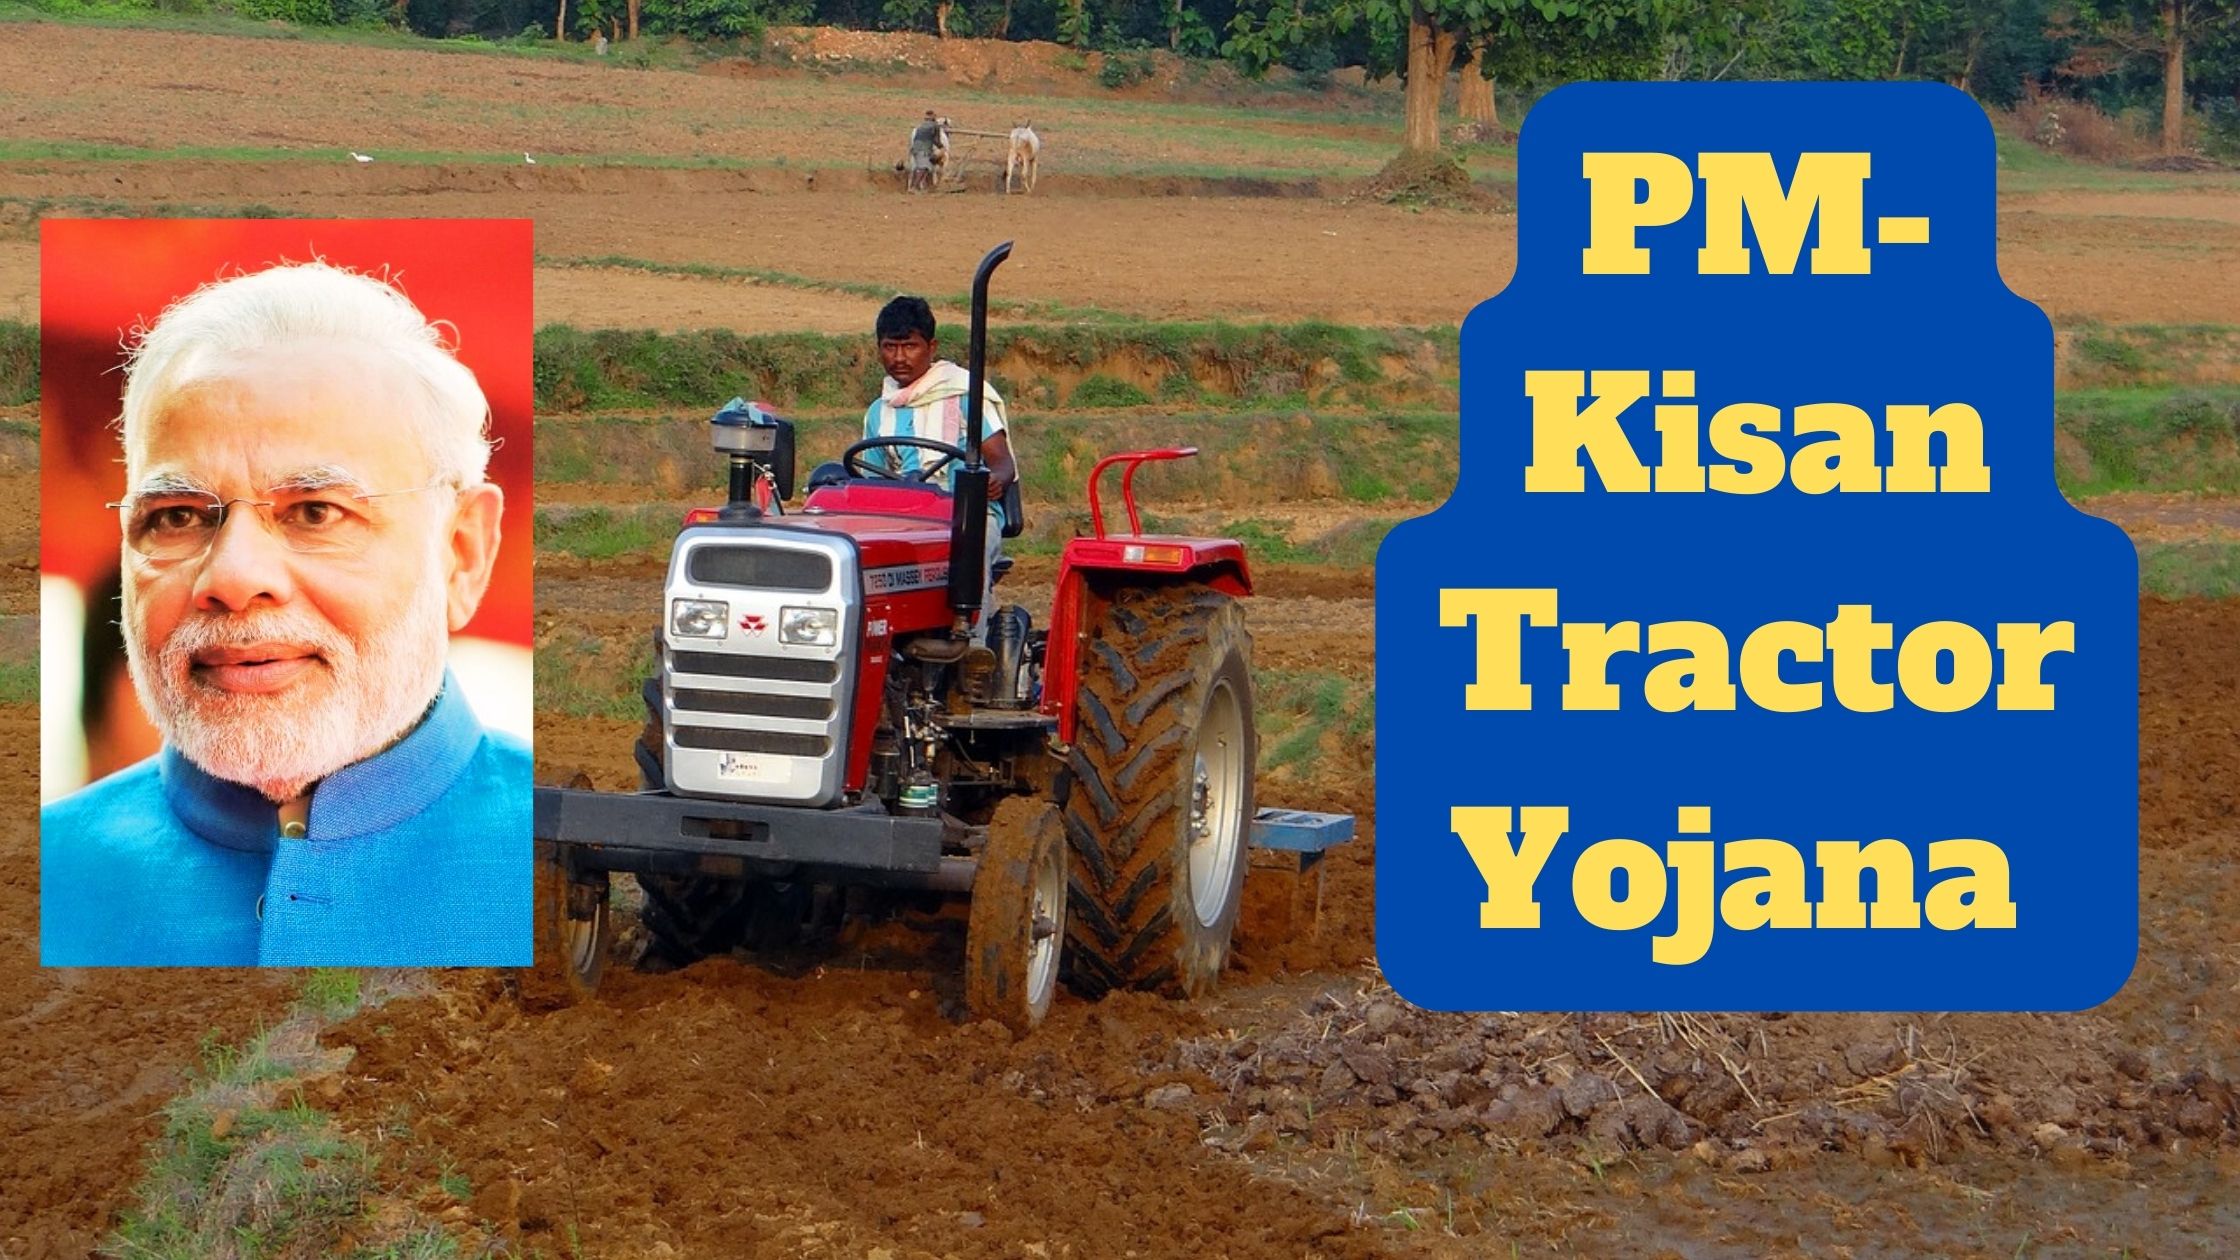 PM-Kisan Tractor Yojana